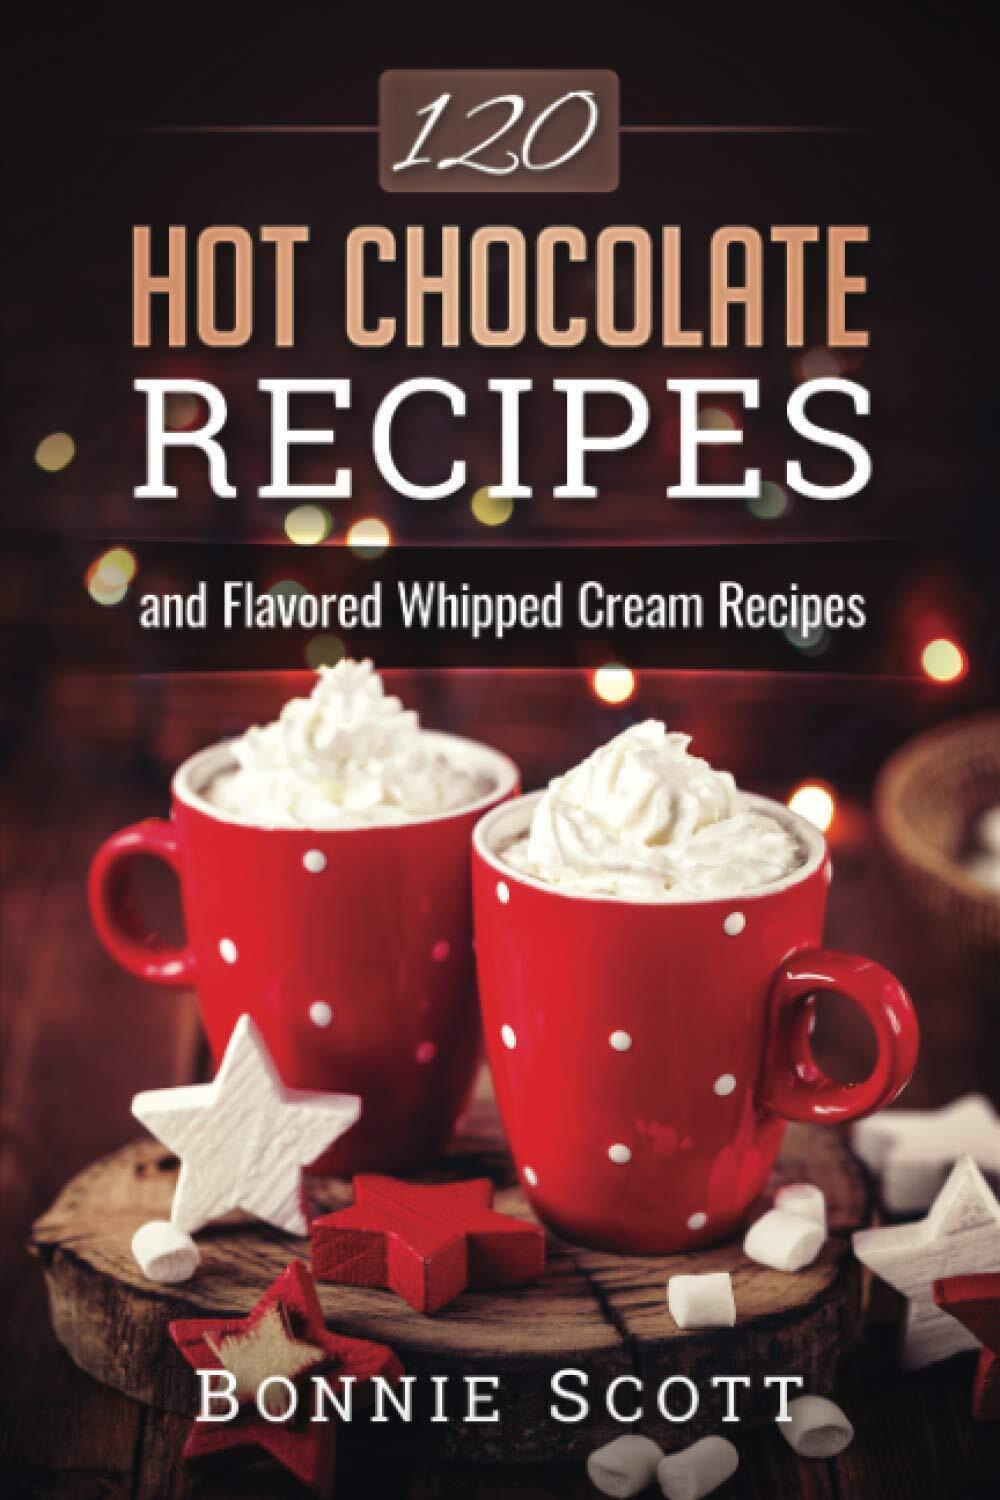 120 Hot Chocolate Recipes by Bonnie Scott book cover